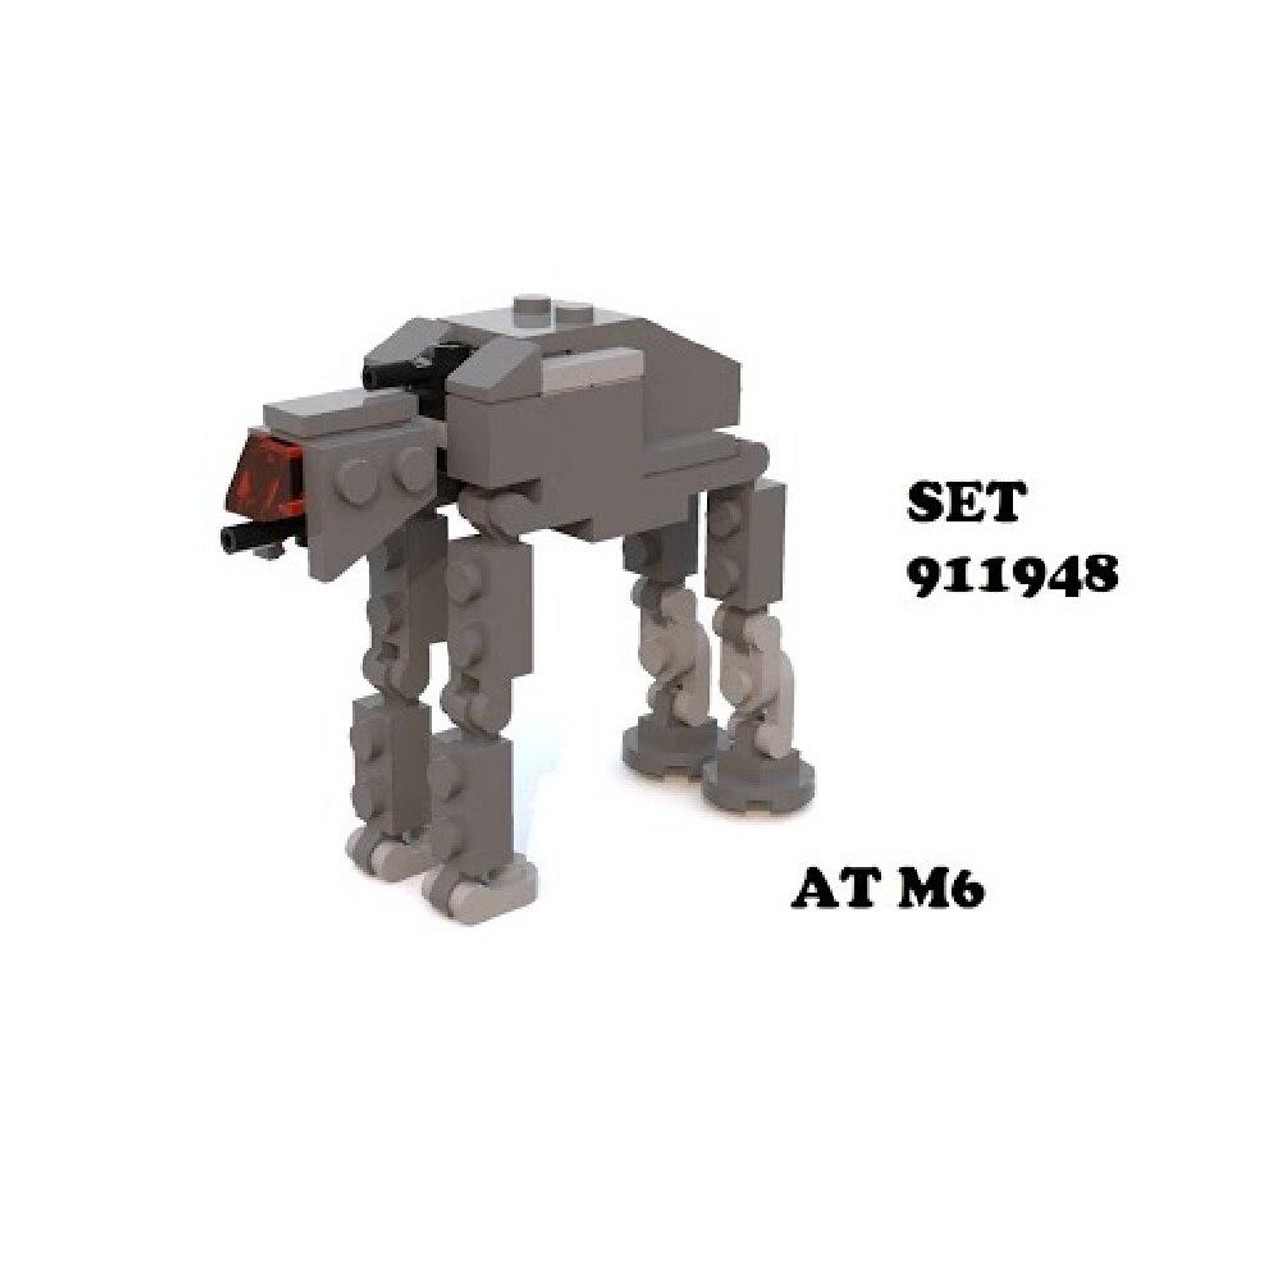 https://cdn11.bigcommerce.com/s-2znav/images/stencil/1280x1280/products/1982/5565/lego-lego-star-wars-at-m6-walker-micro-set-37-pcs-all-terrain-megacaliber-six__64745.1614357798.jpg?c=2